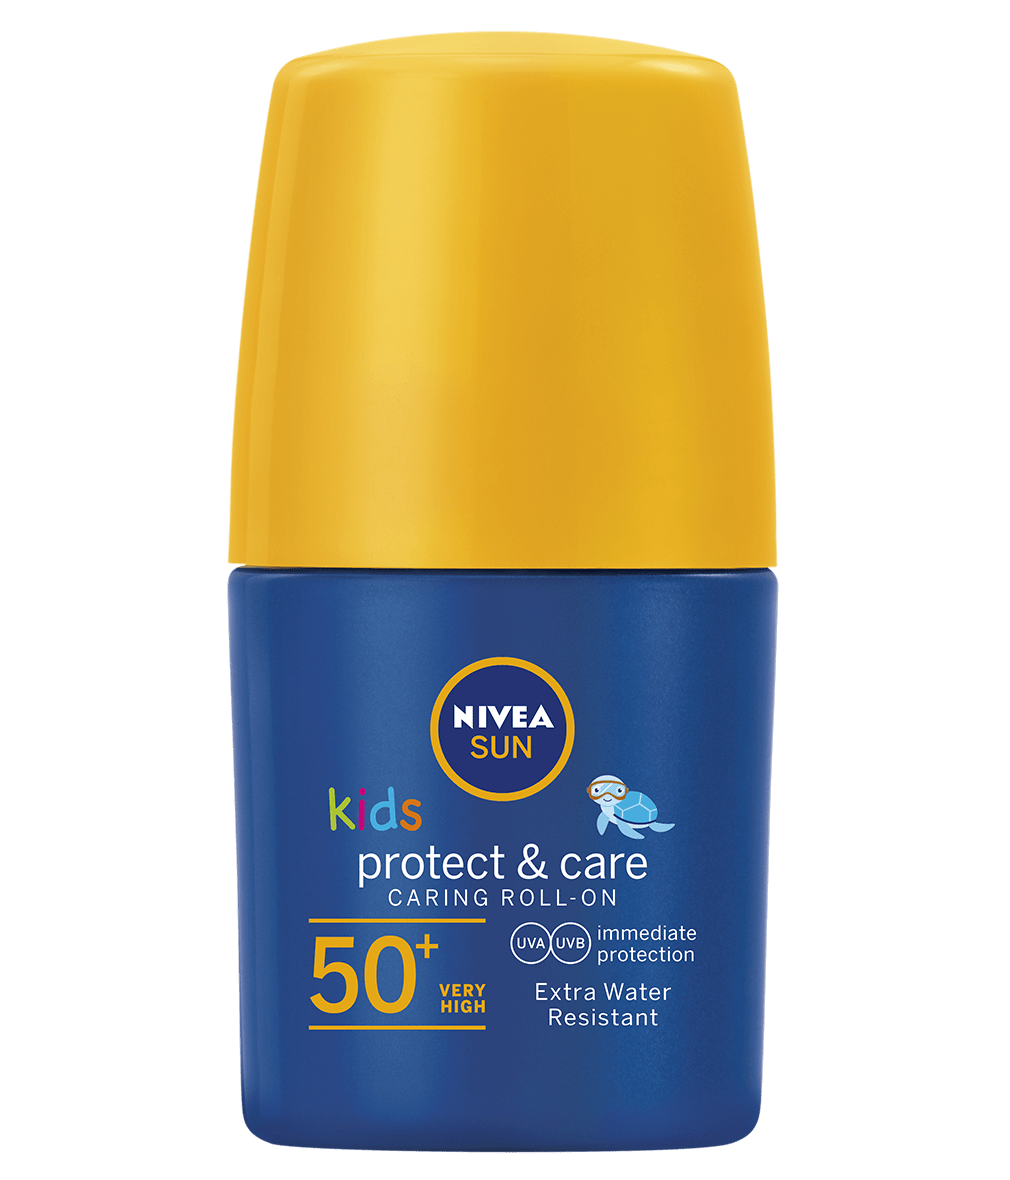 Nivea Sun Kids Caring Roll-on Spf50+ Sunscreen 50ml - myhoodmarket